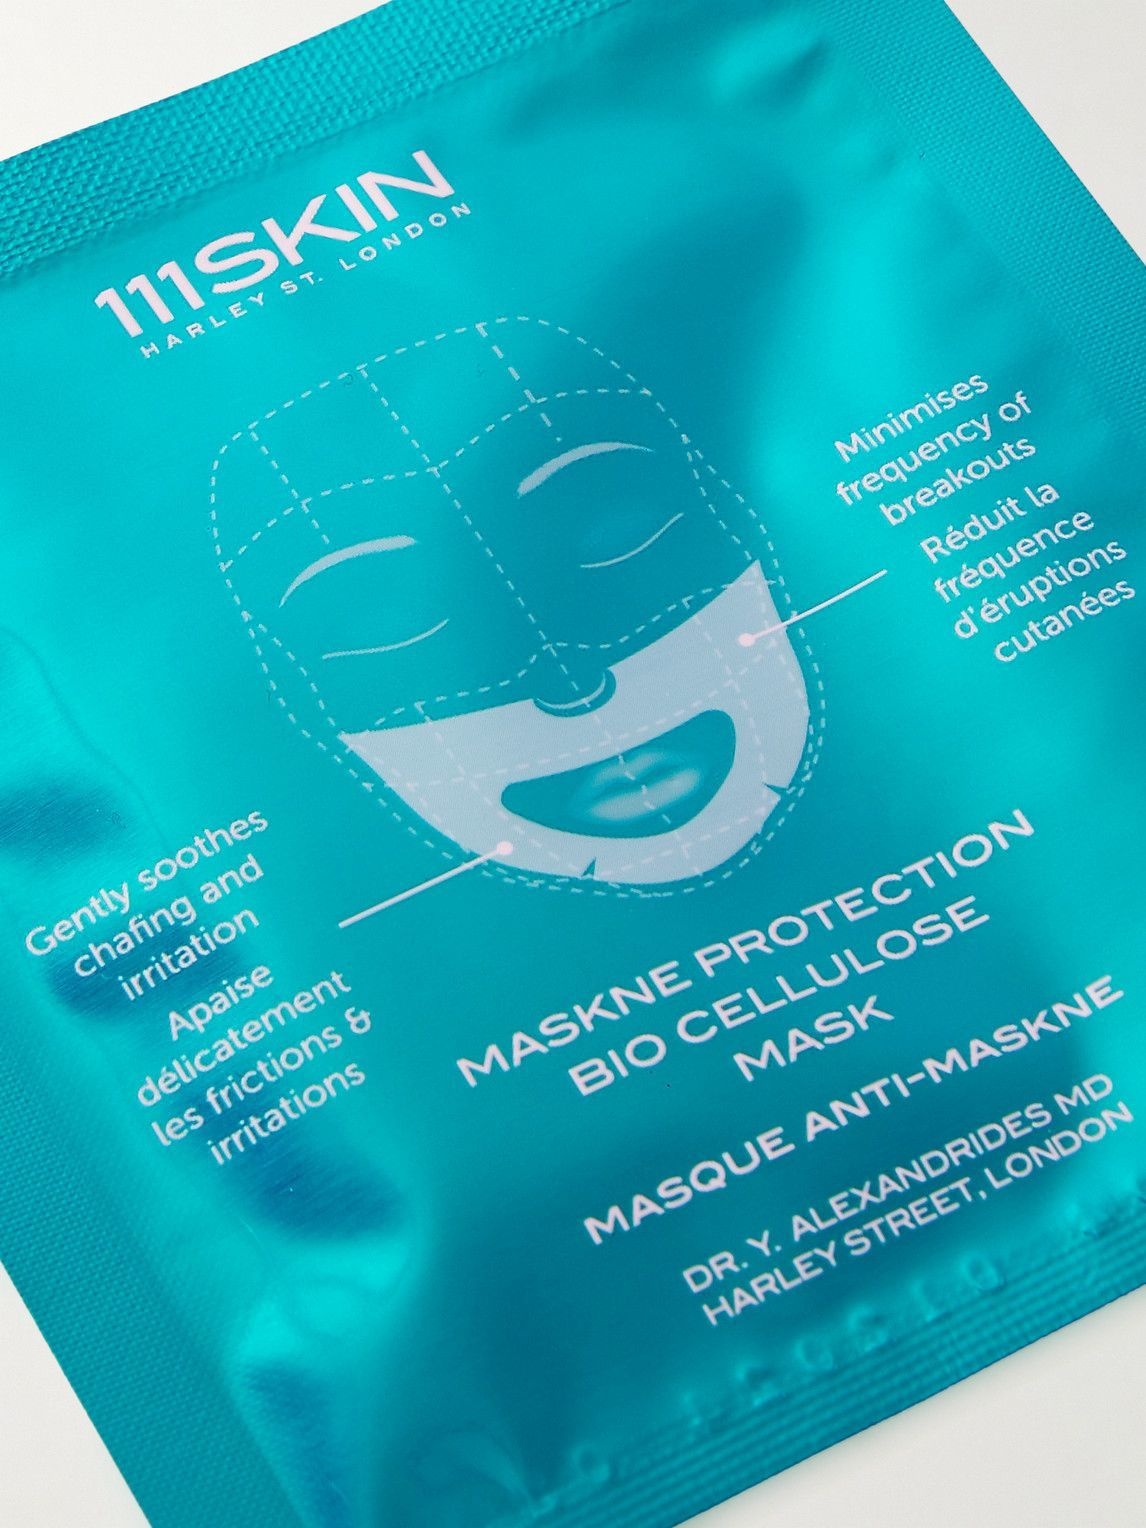 111Skin - Maskne Protection Bio-Cellulose Mask, 10ml